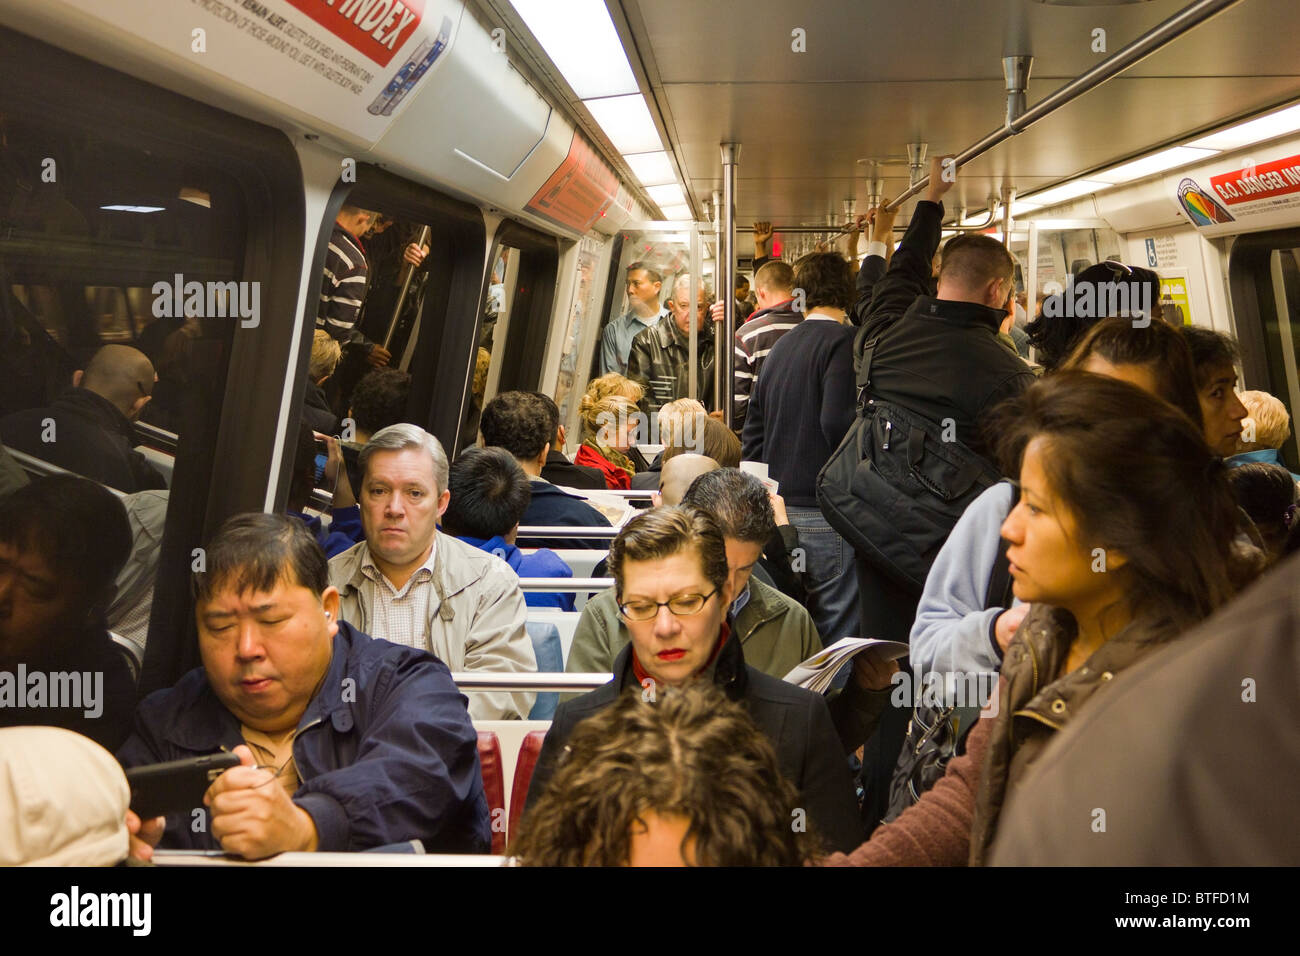 people in car of Washington DC metrorail, USA Stock Photo